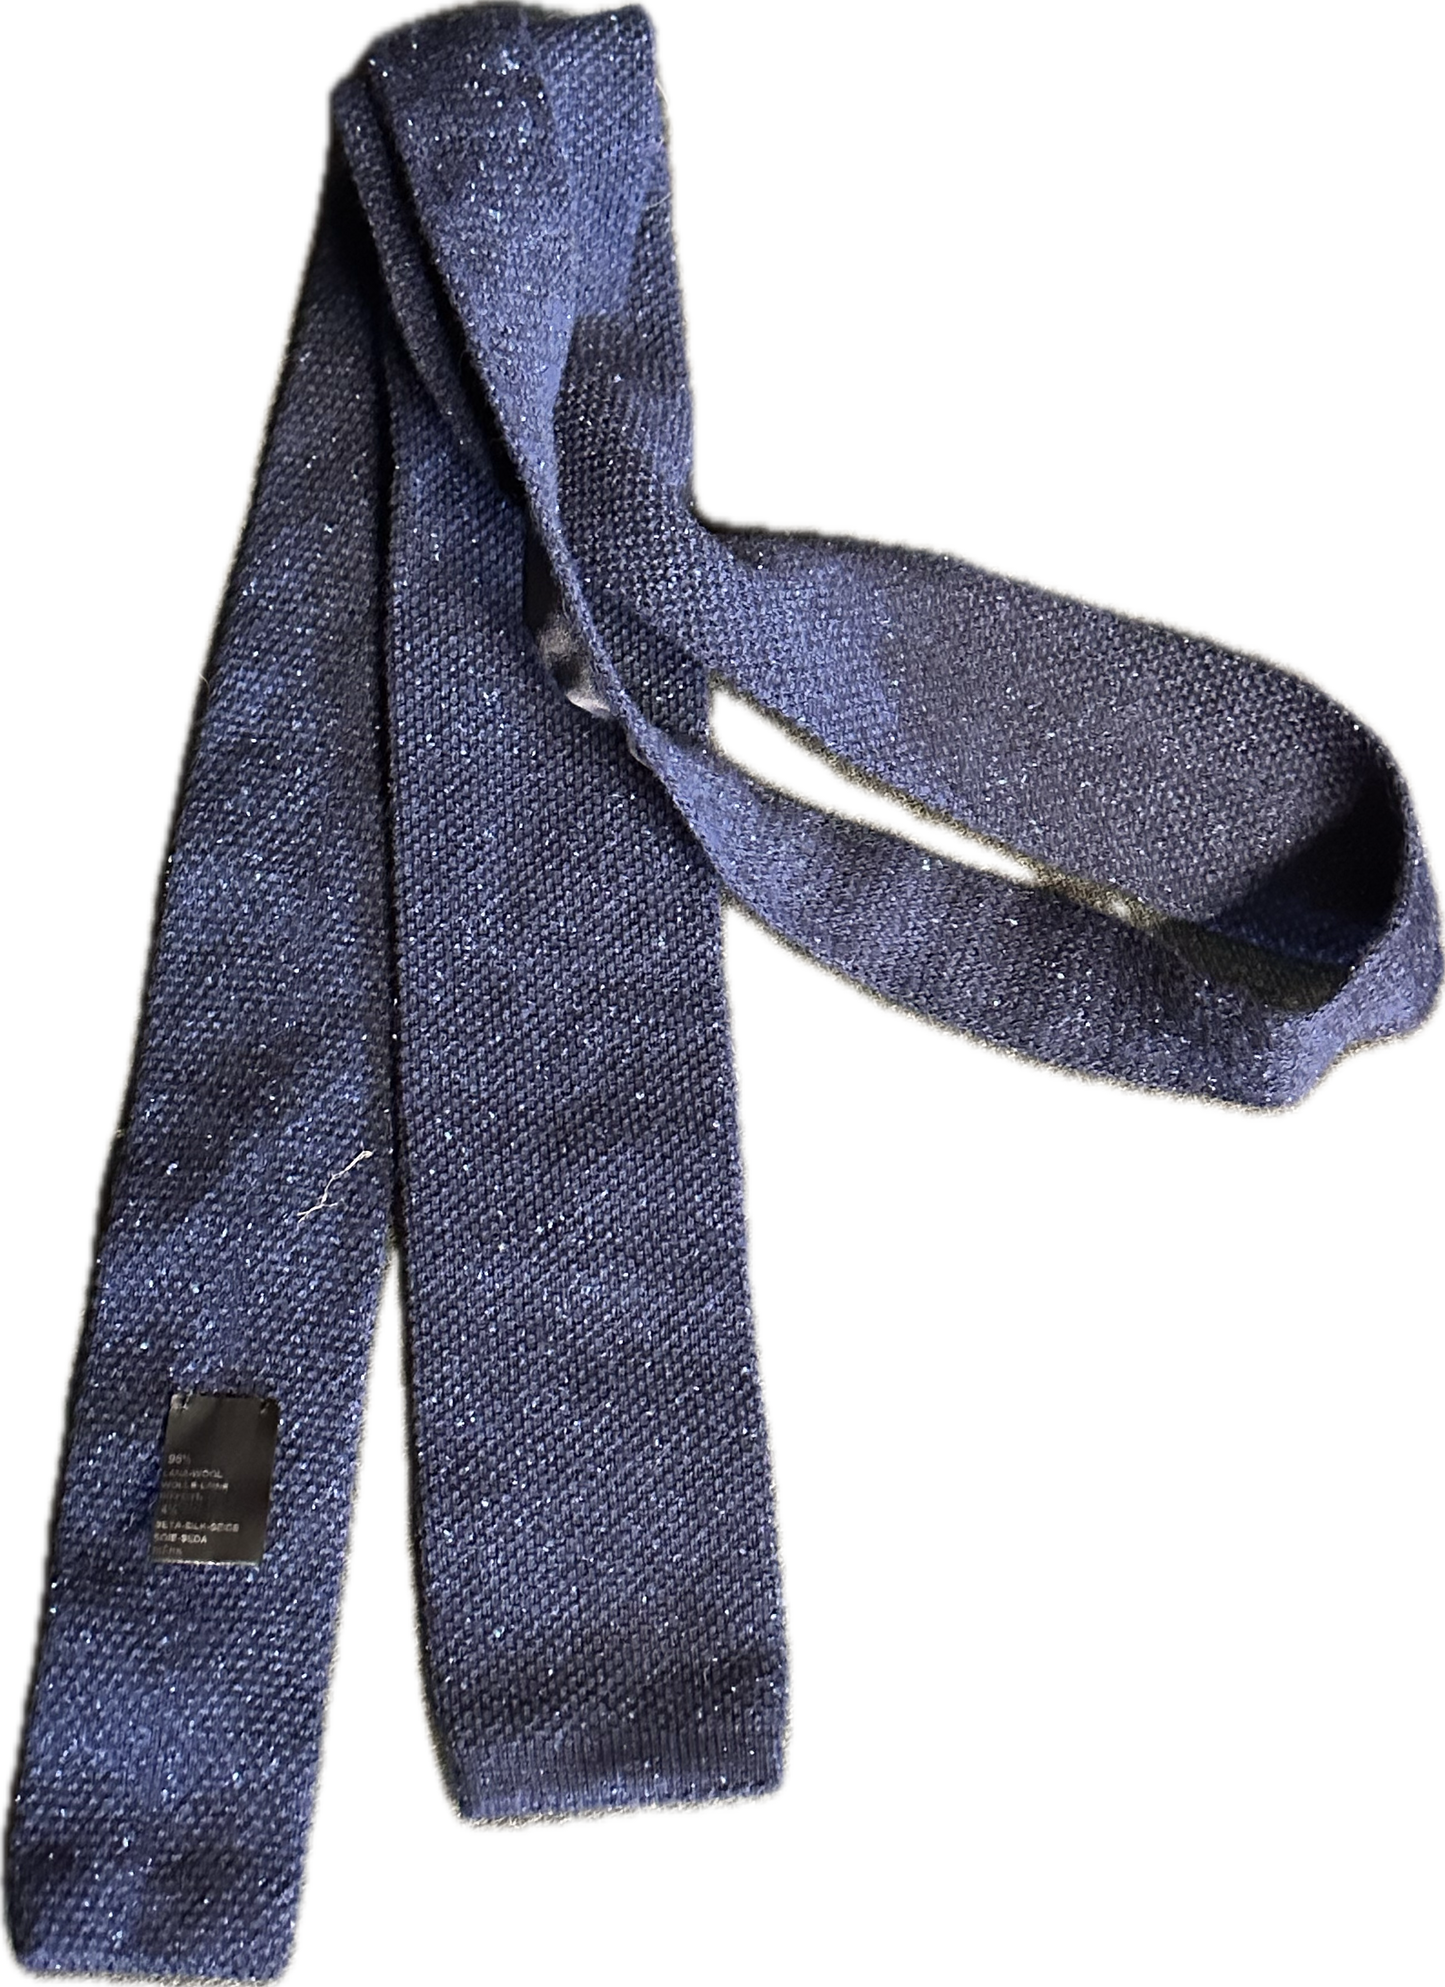 THE GENTLEMEN: Raymond’s Italian Handmade necktie